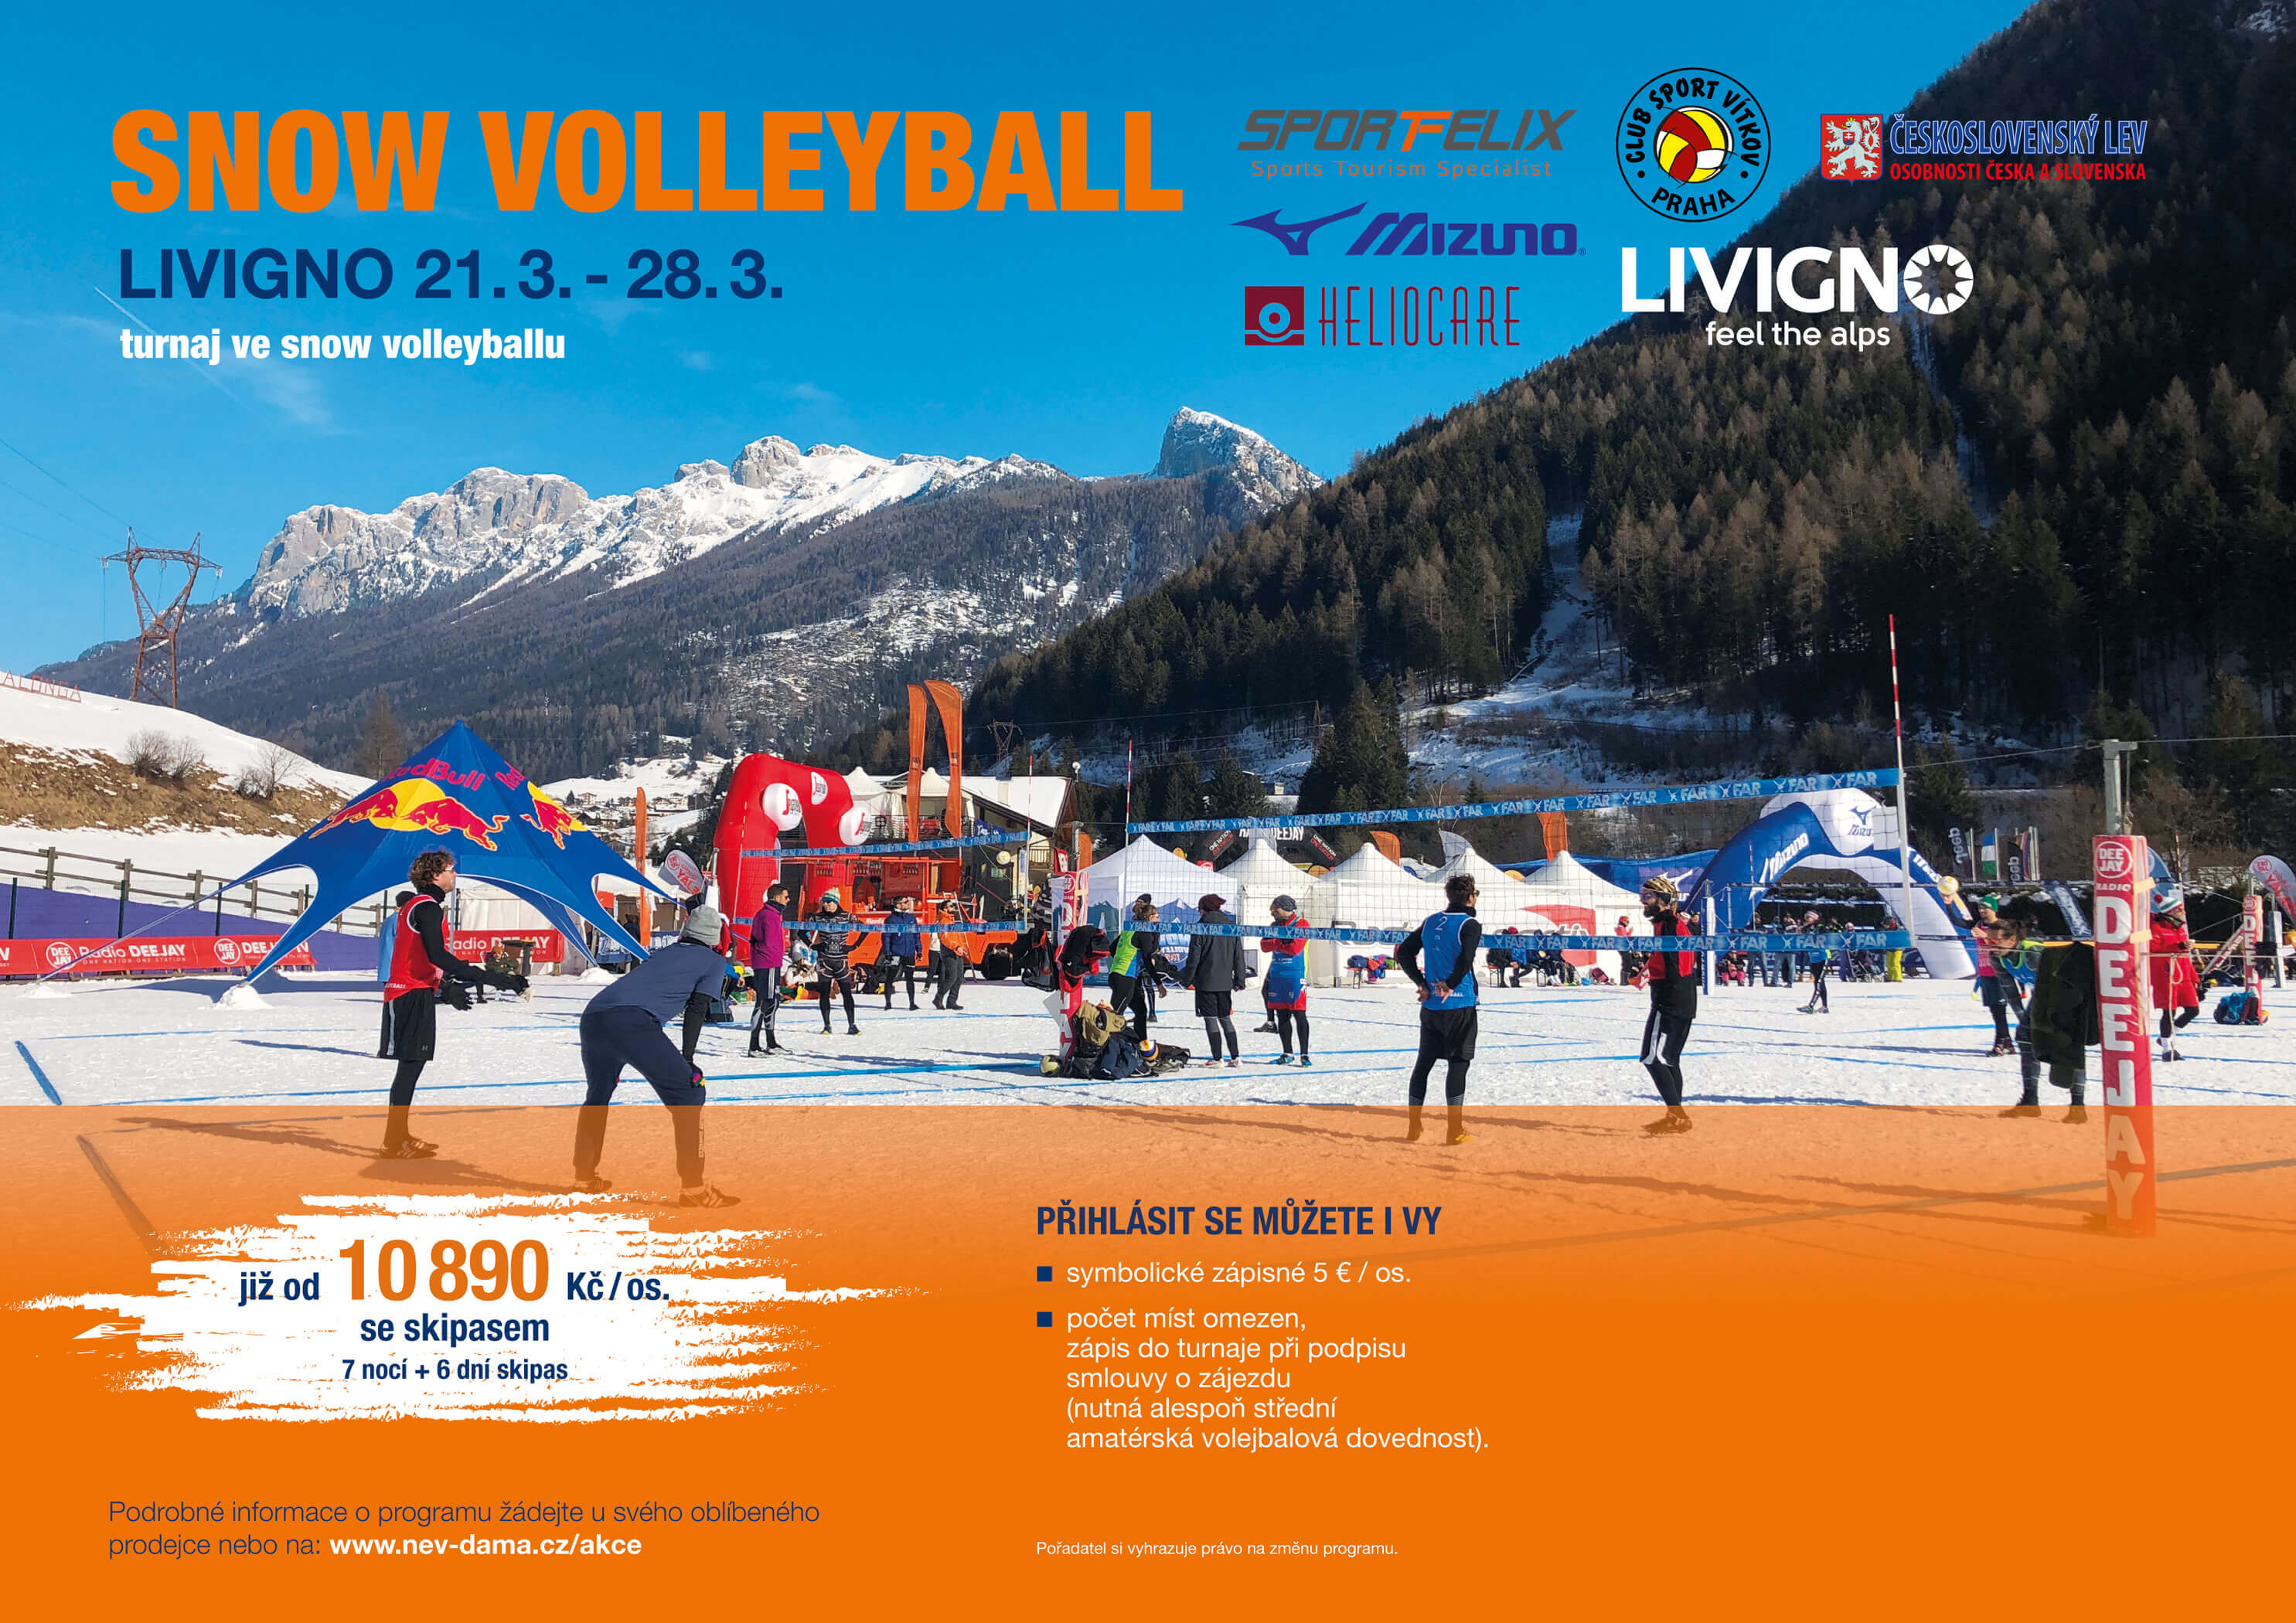 Snow Volleyball Livigno